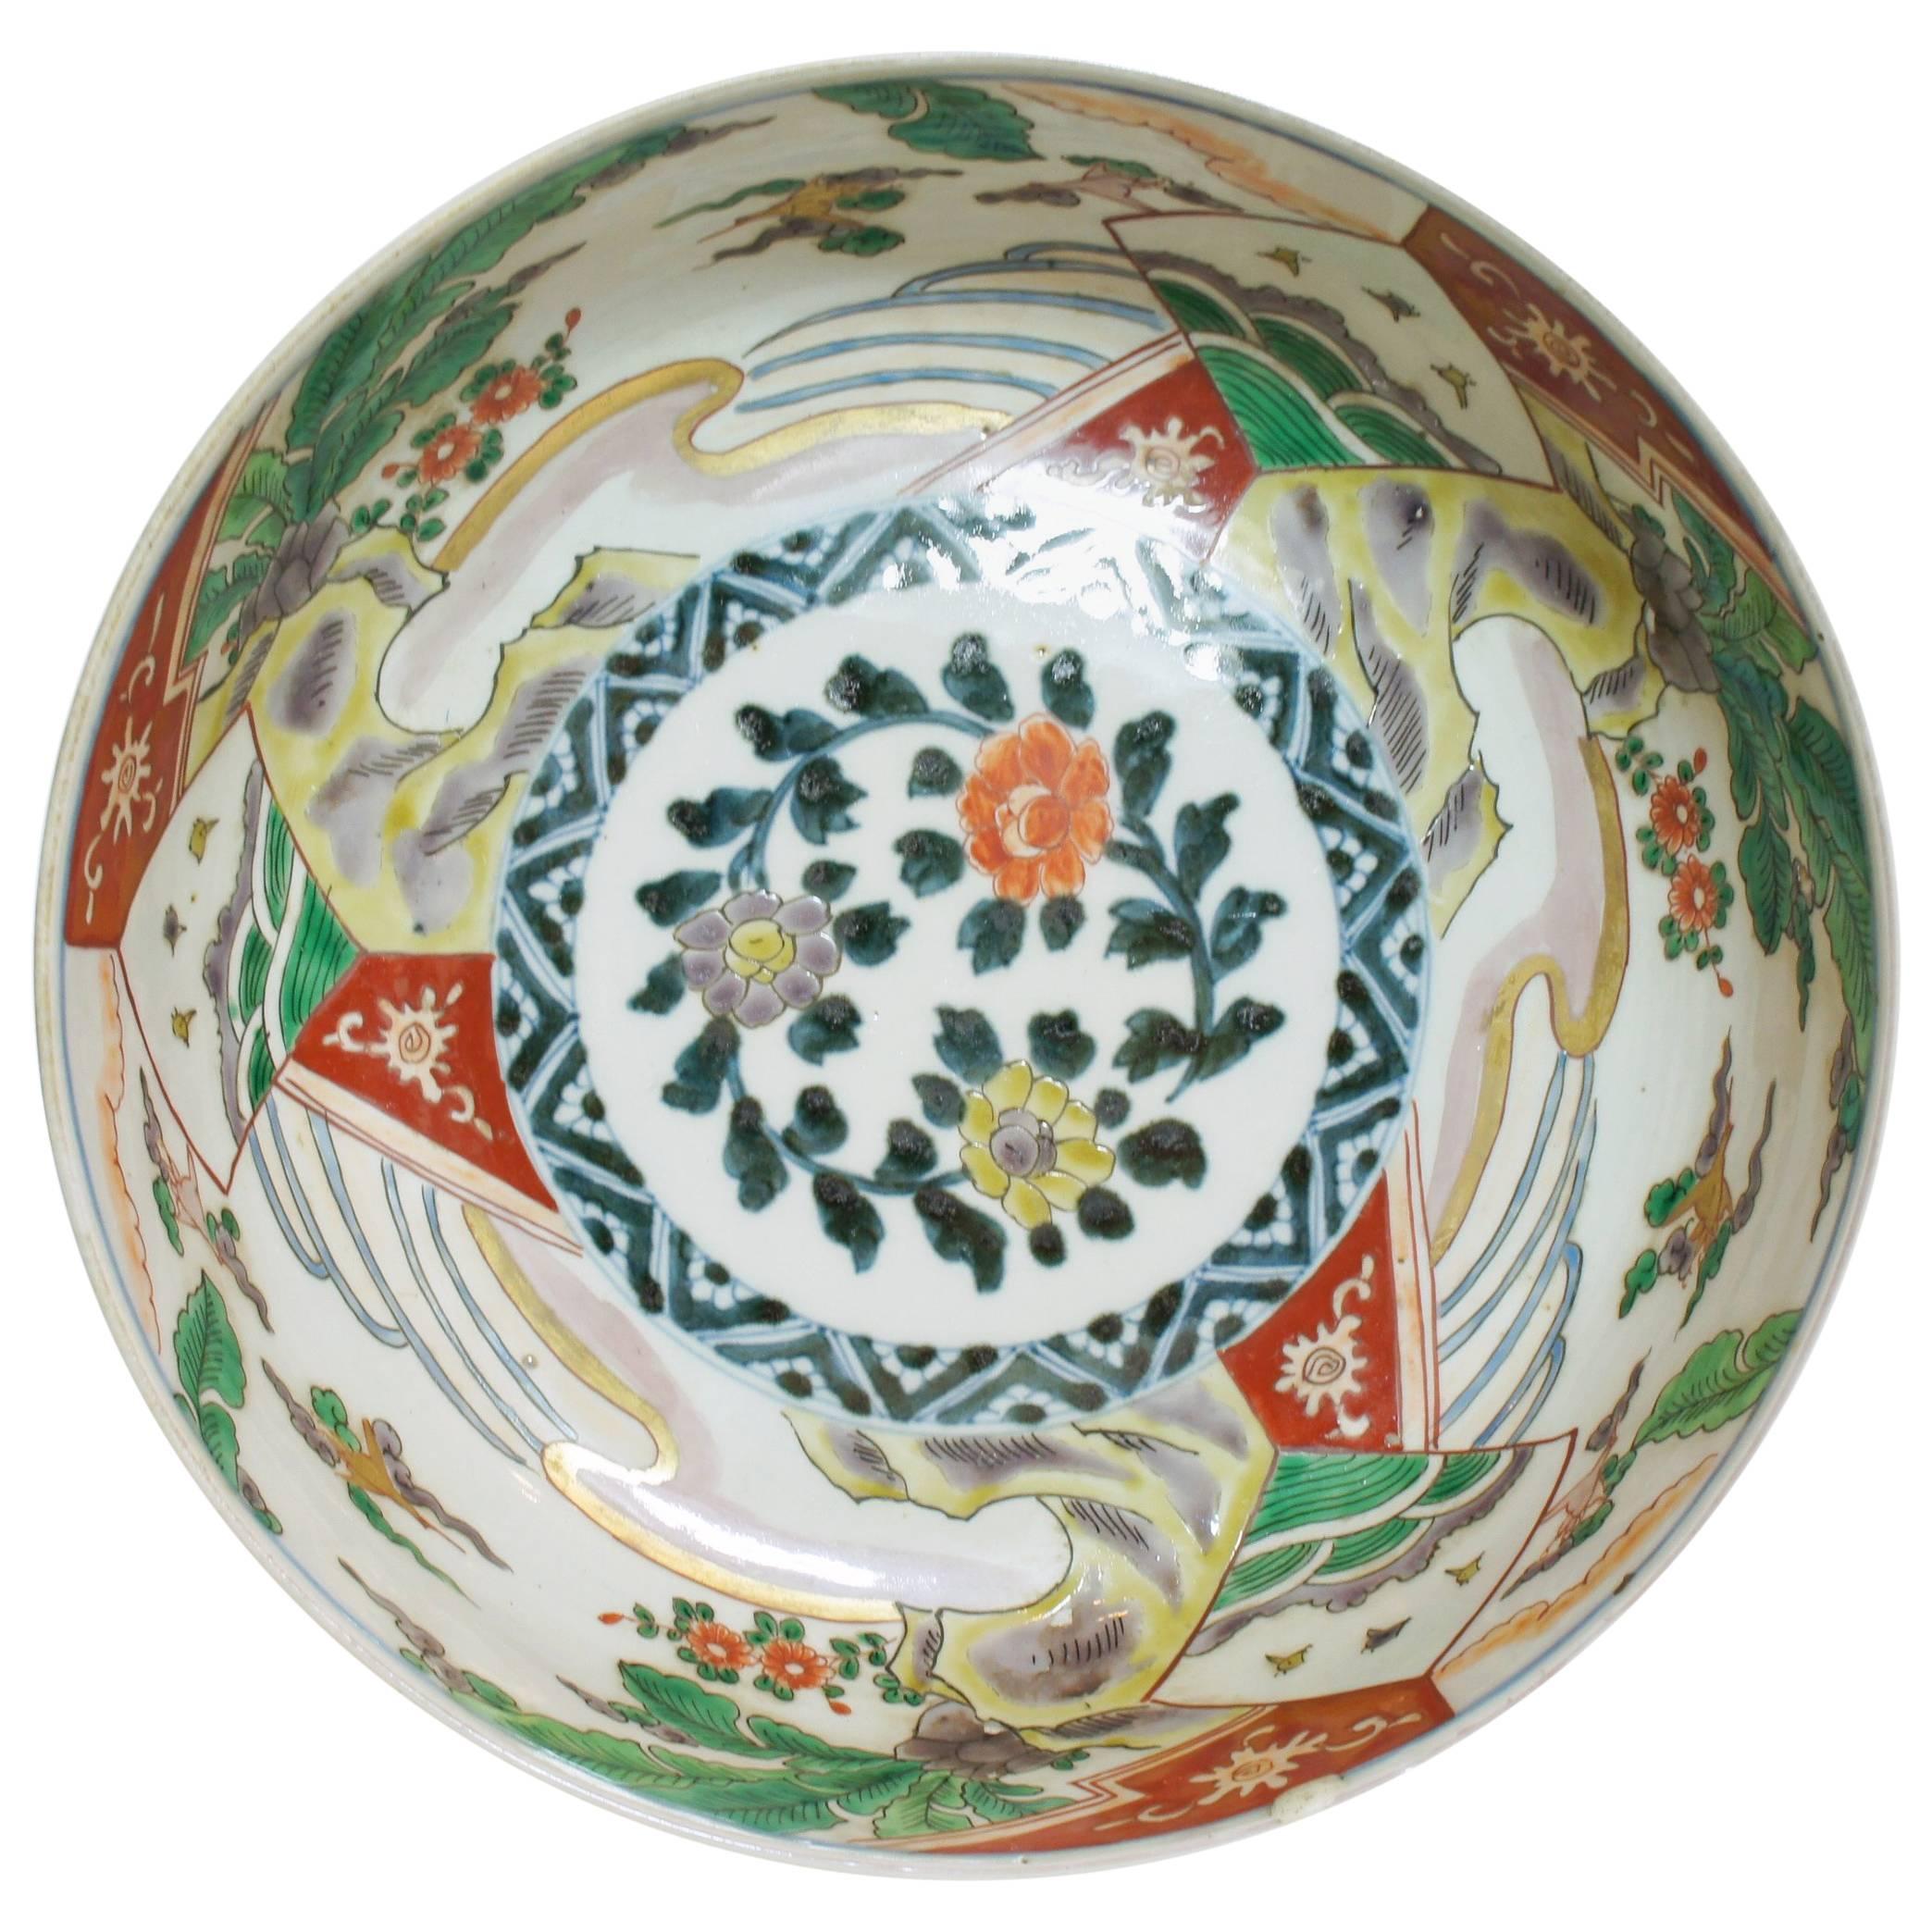 Japanese Colorful Landscape and Floral Motif on Ceramic Koimari Ware Bowl, 1800s